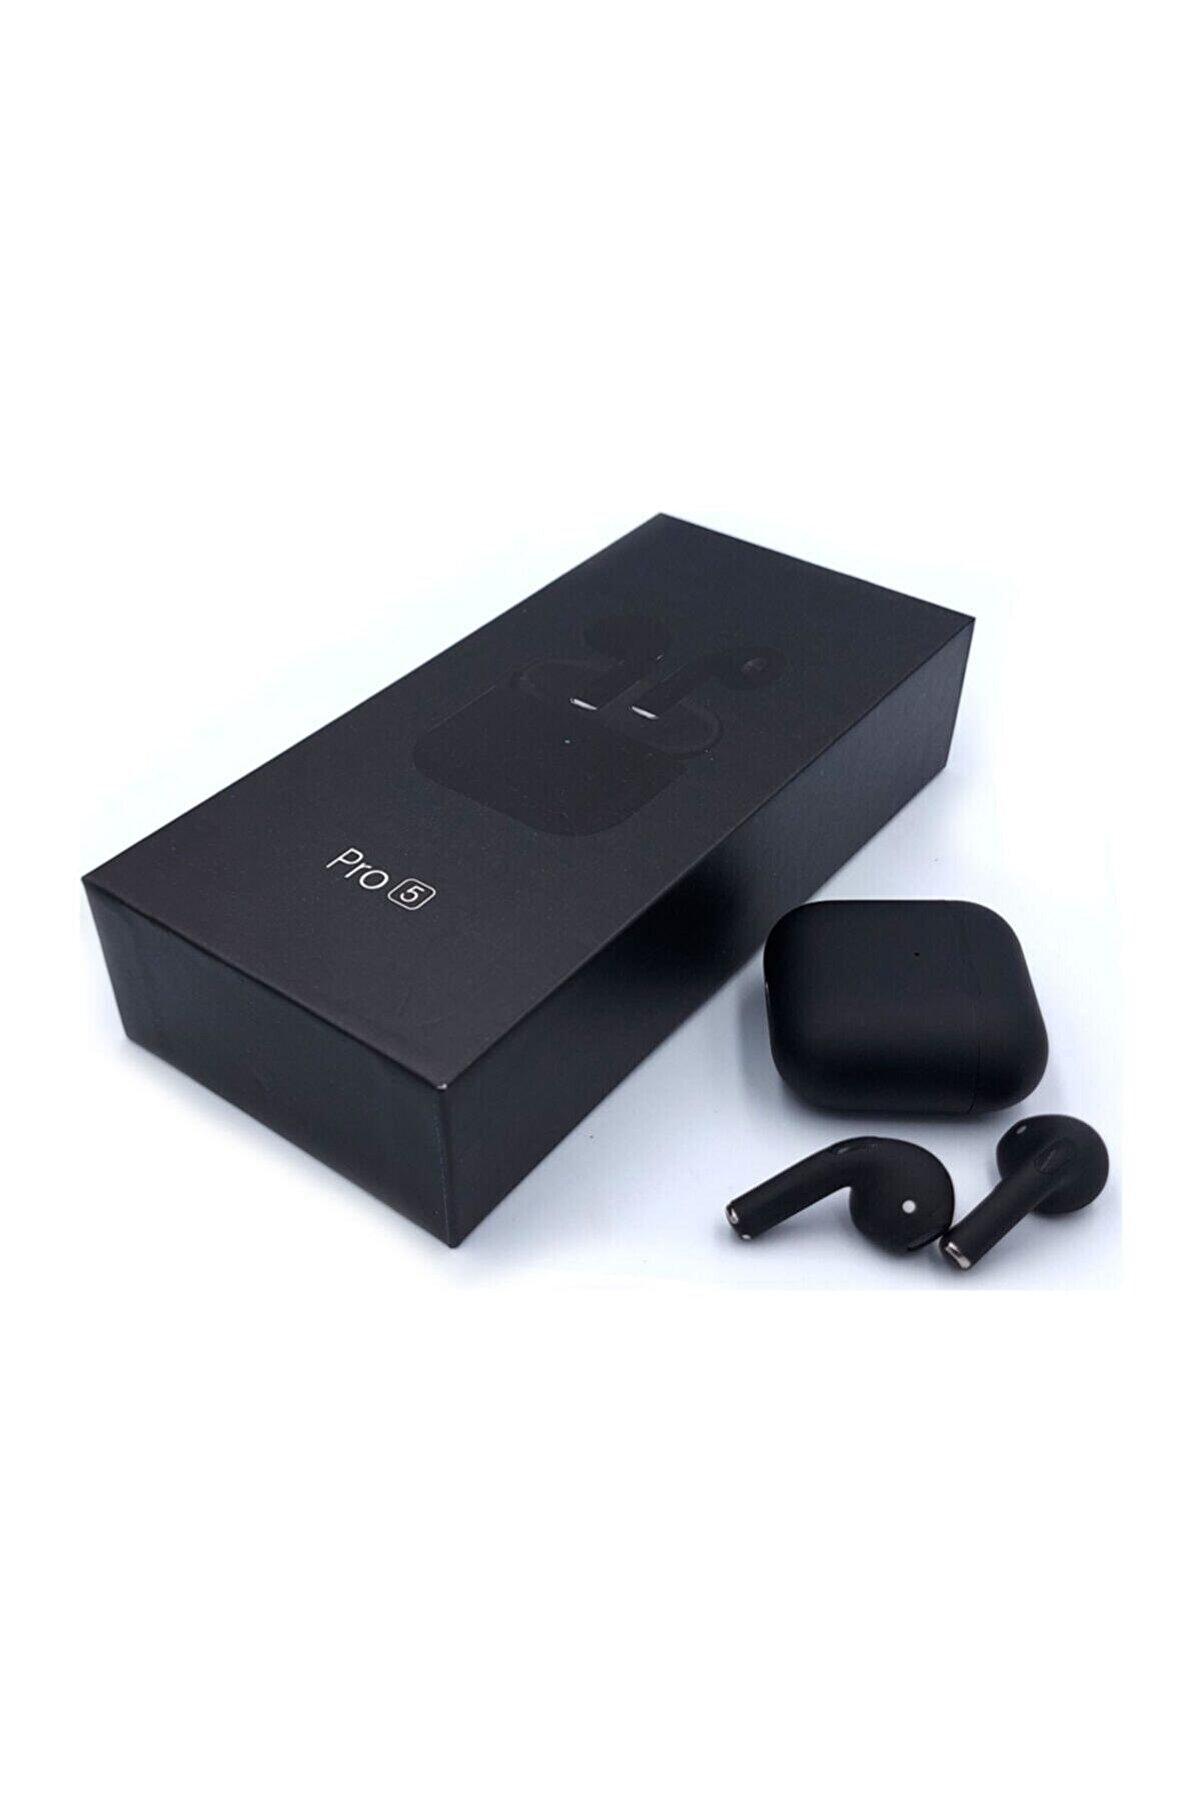 Teknoloji Gelsin Pro 5 Kablosuz Kulaklık Bluetooth Kulaklık Hd Ses Extra Bas Stereo Siyah